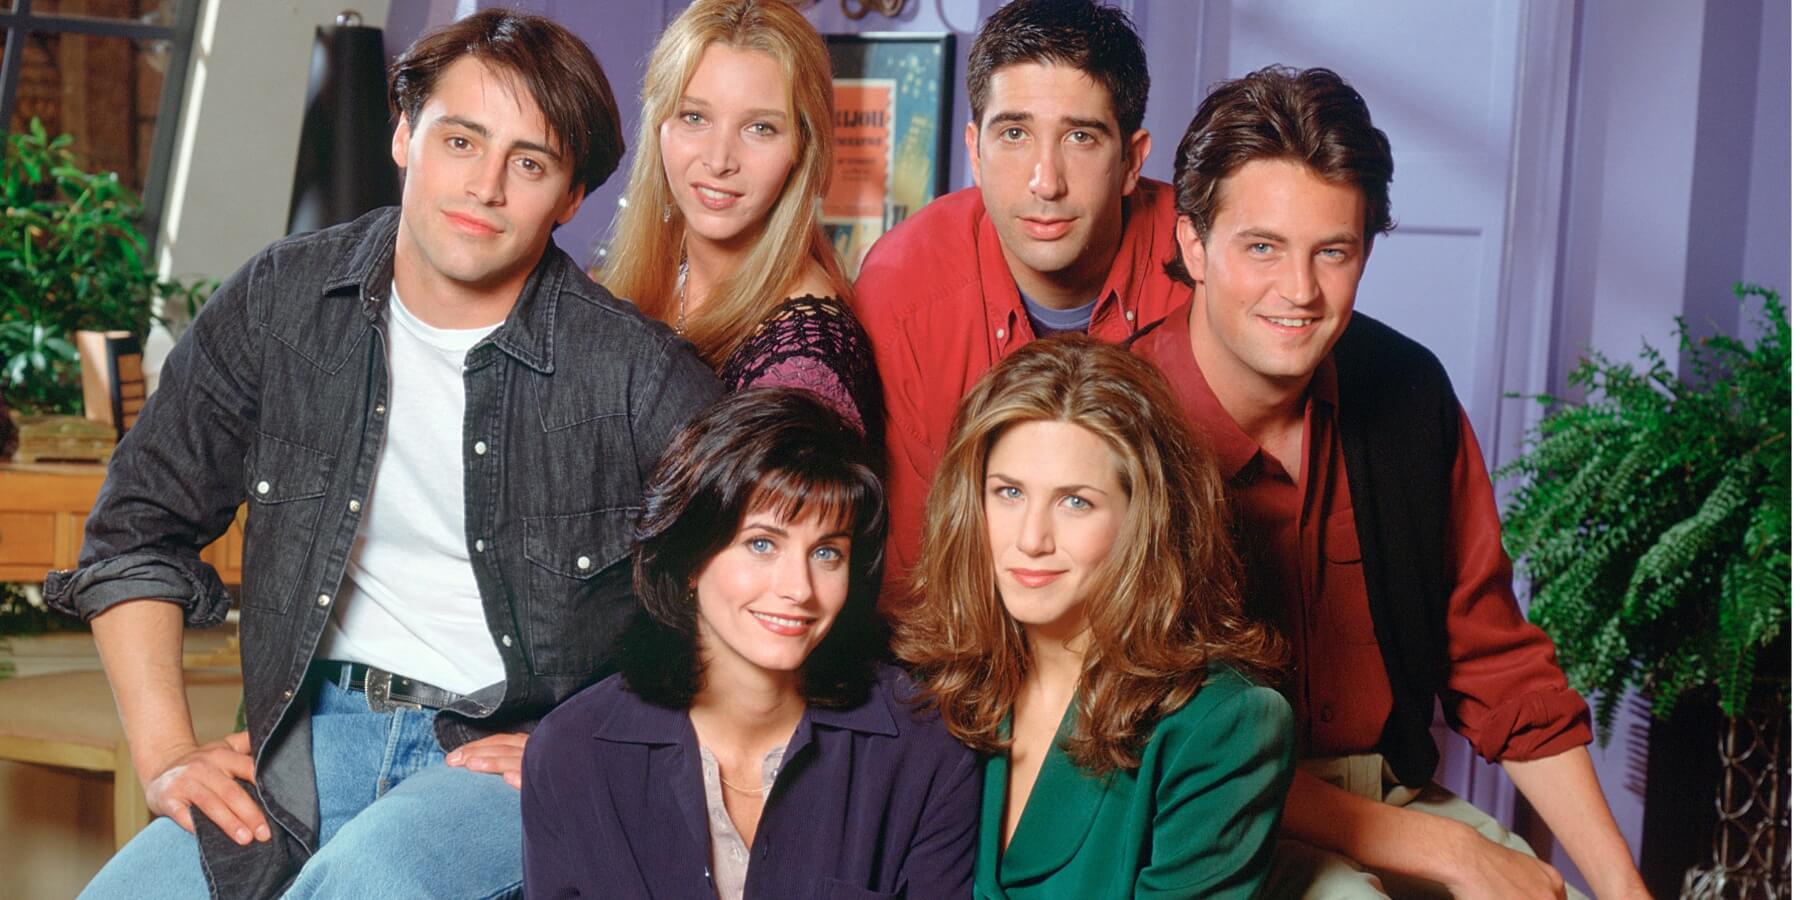 Matt LeBlanc, Lisa Kudrow, David Schwimmer, Matthew Perry, Jennifer Aniston and Courtney Cox on the 'Friends' set during season 1.